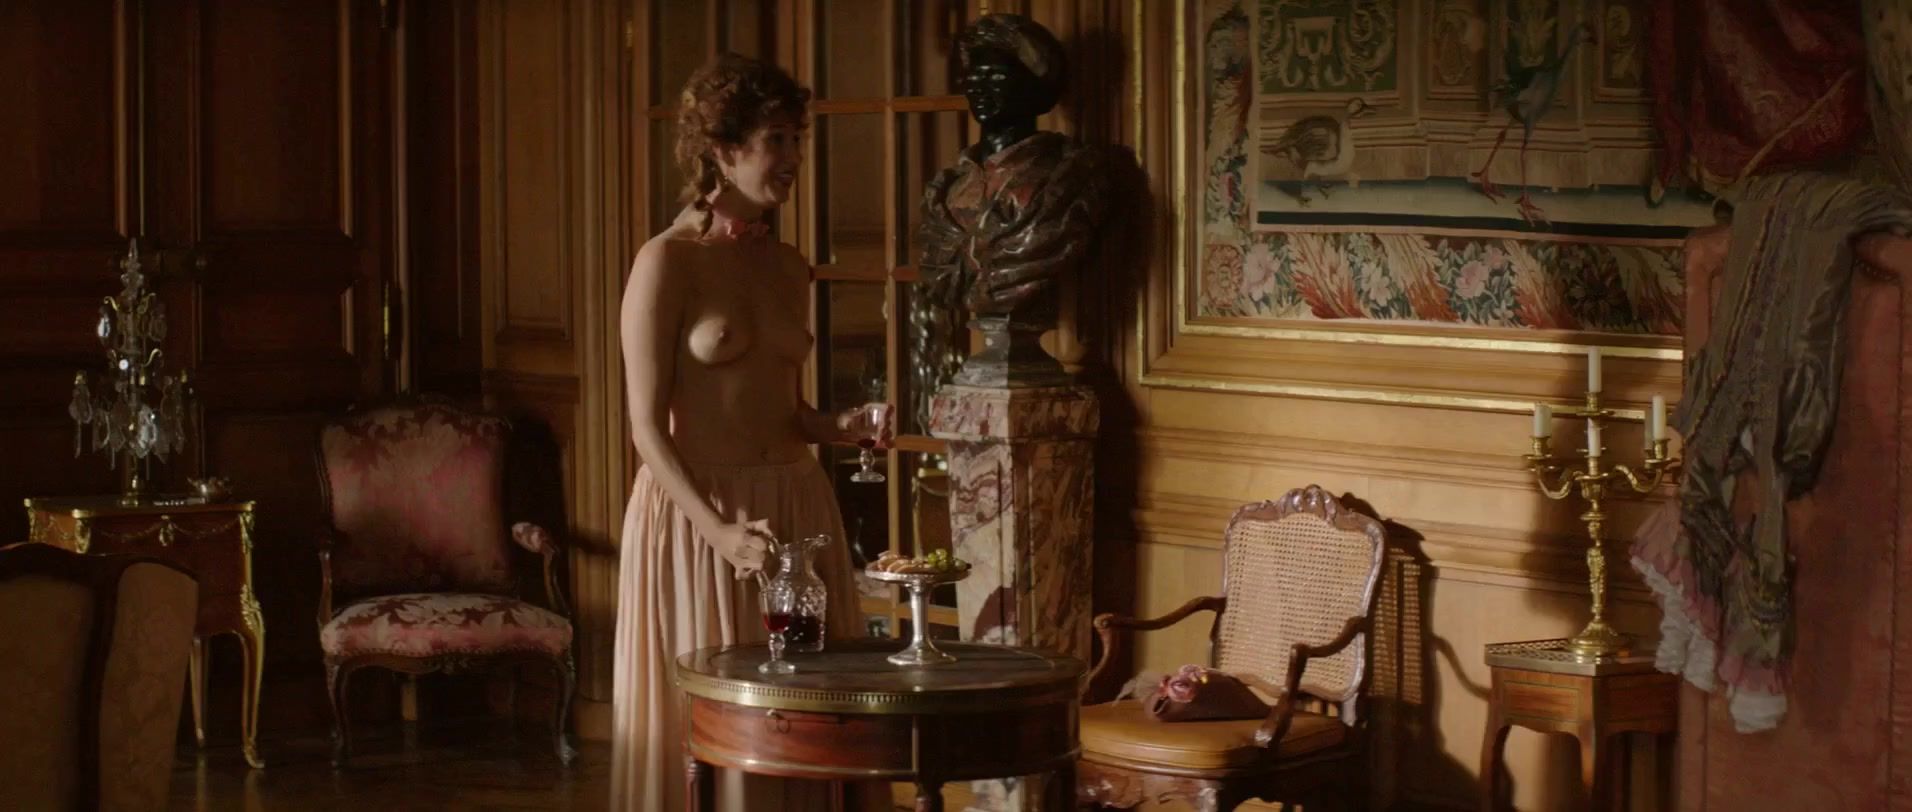 Creampies Manon Kneuse naked - Mademoiselle de Joncquieres (2018) Class Room